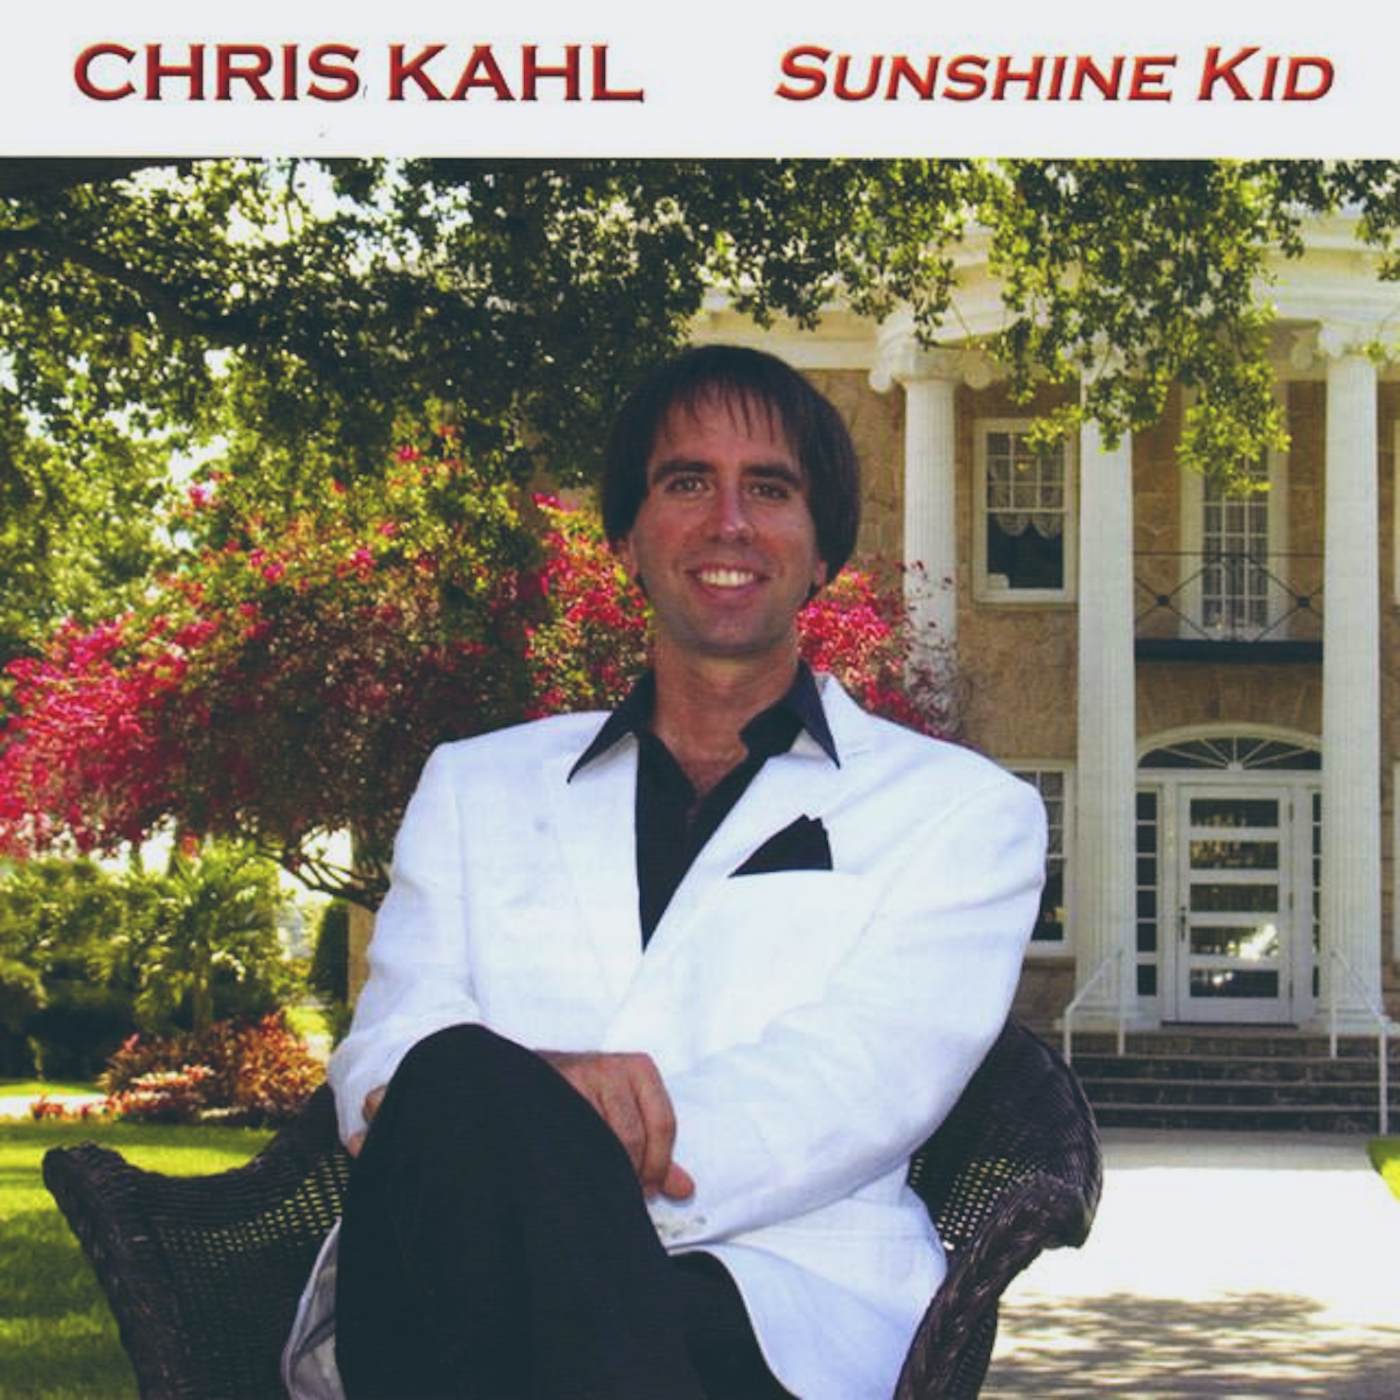 Chris Kahl